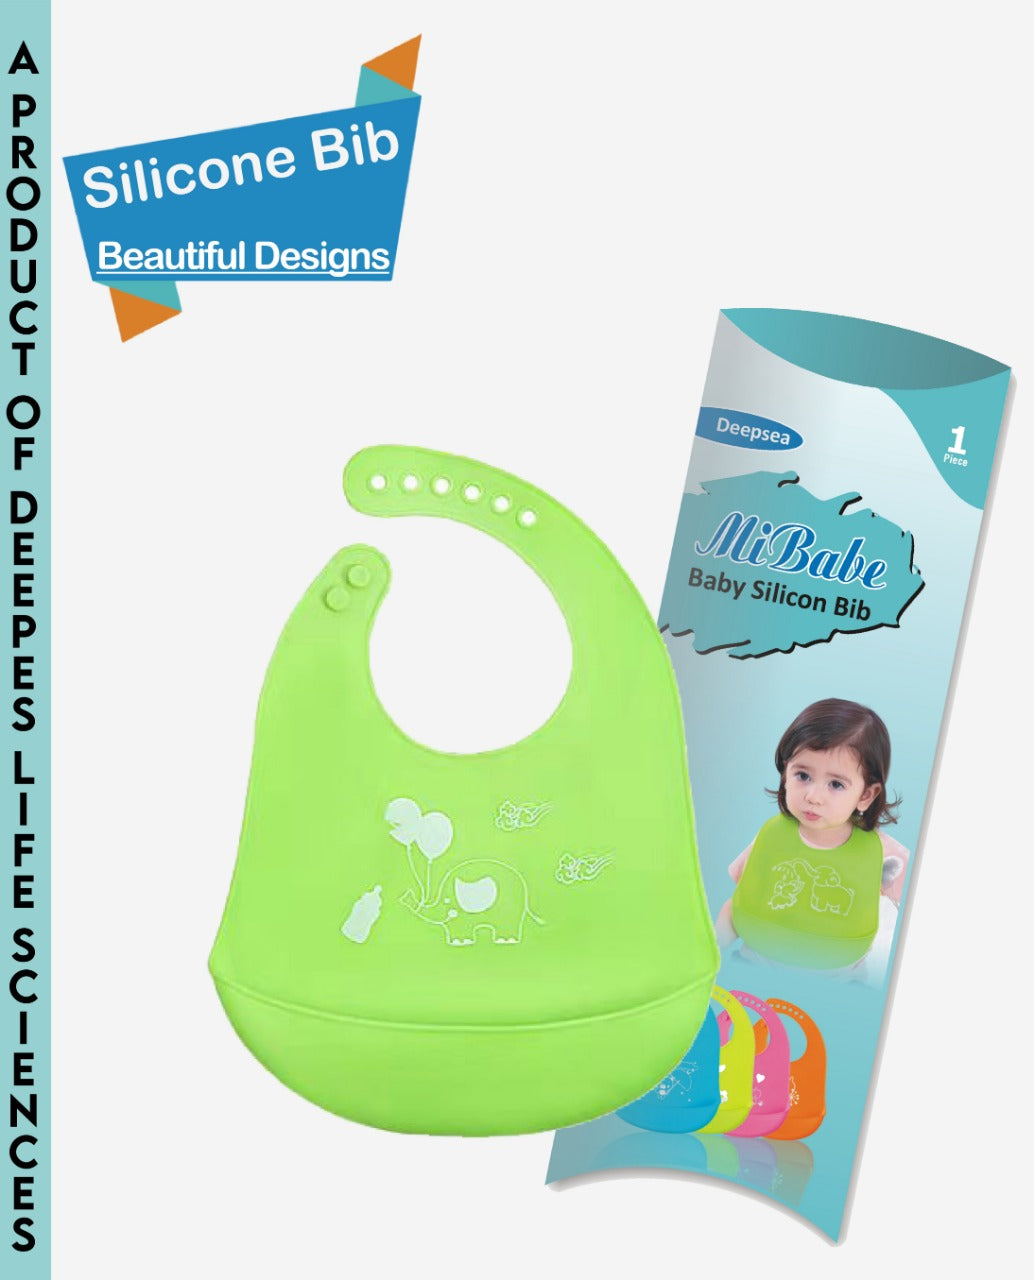 Baby Silicone Bib - Beautiful Designs